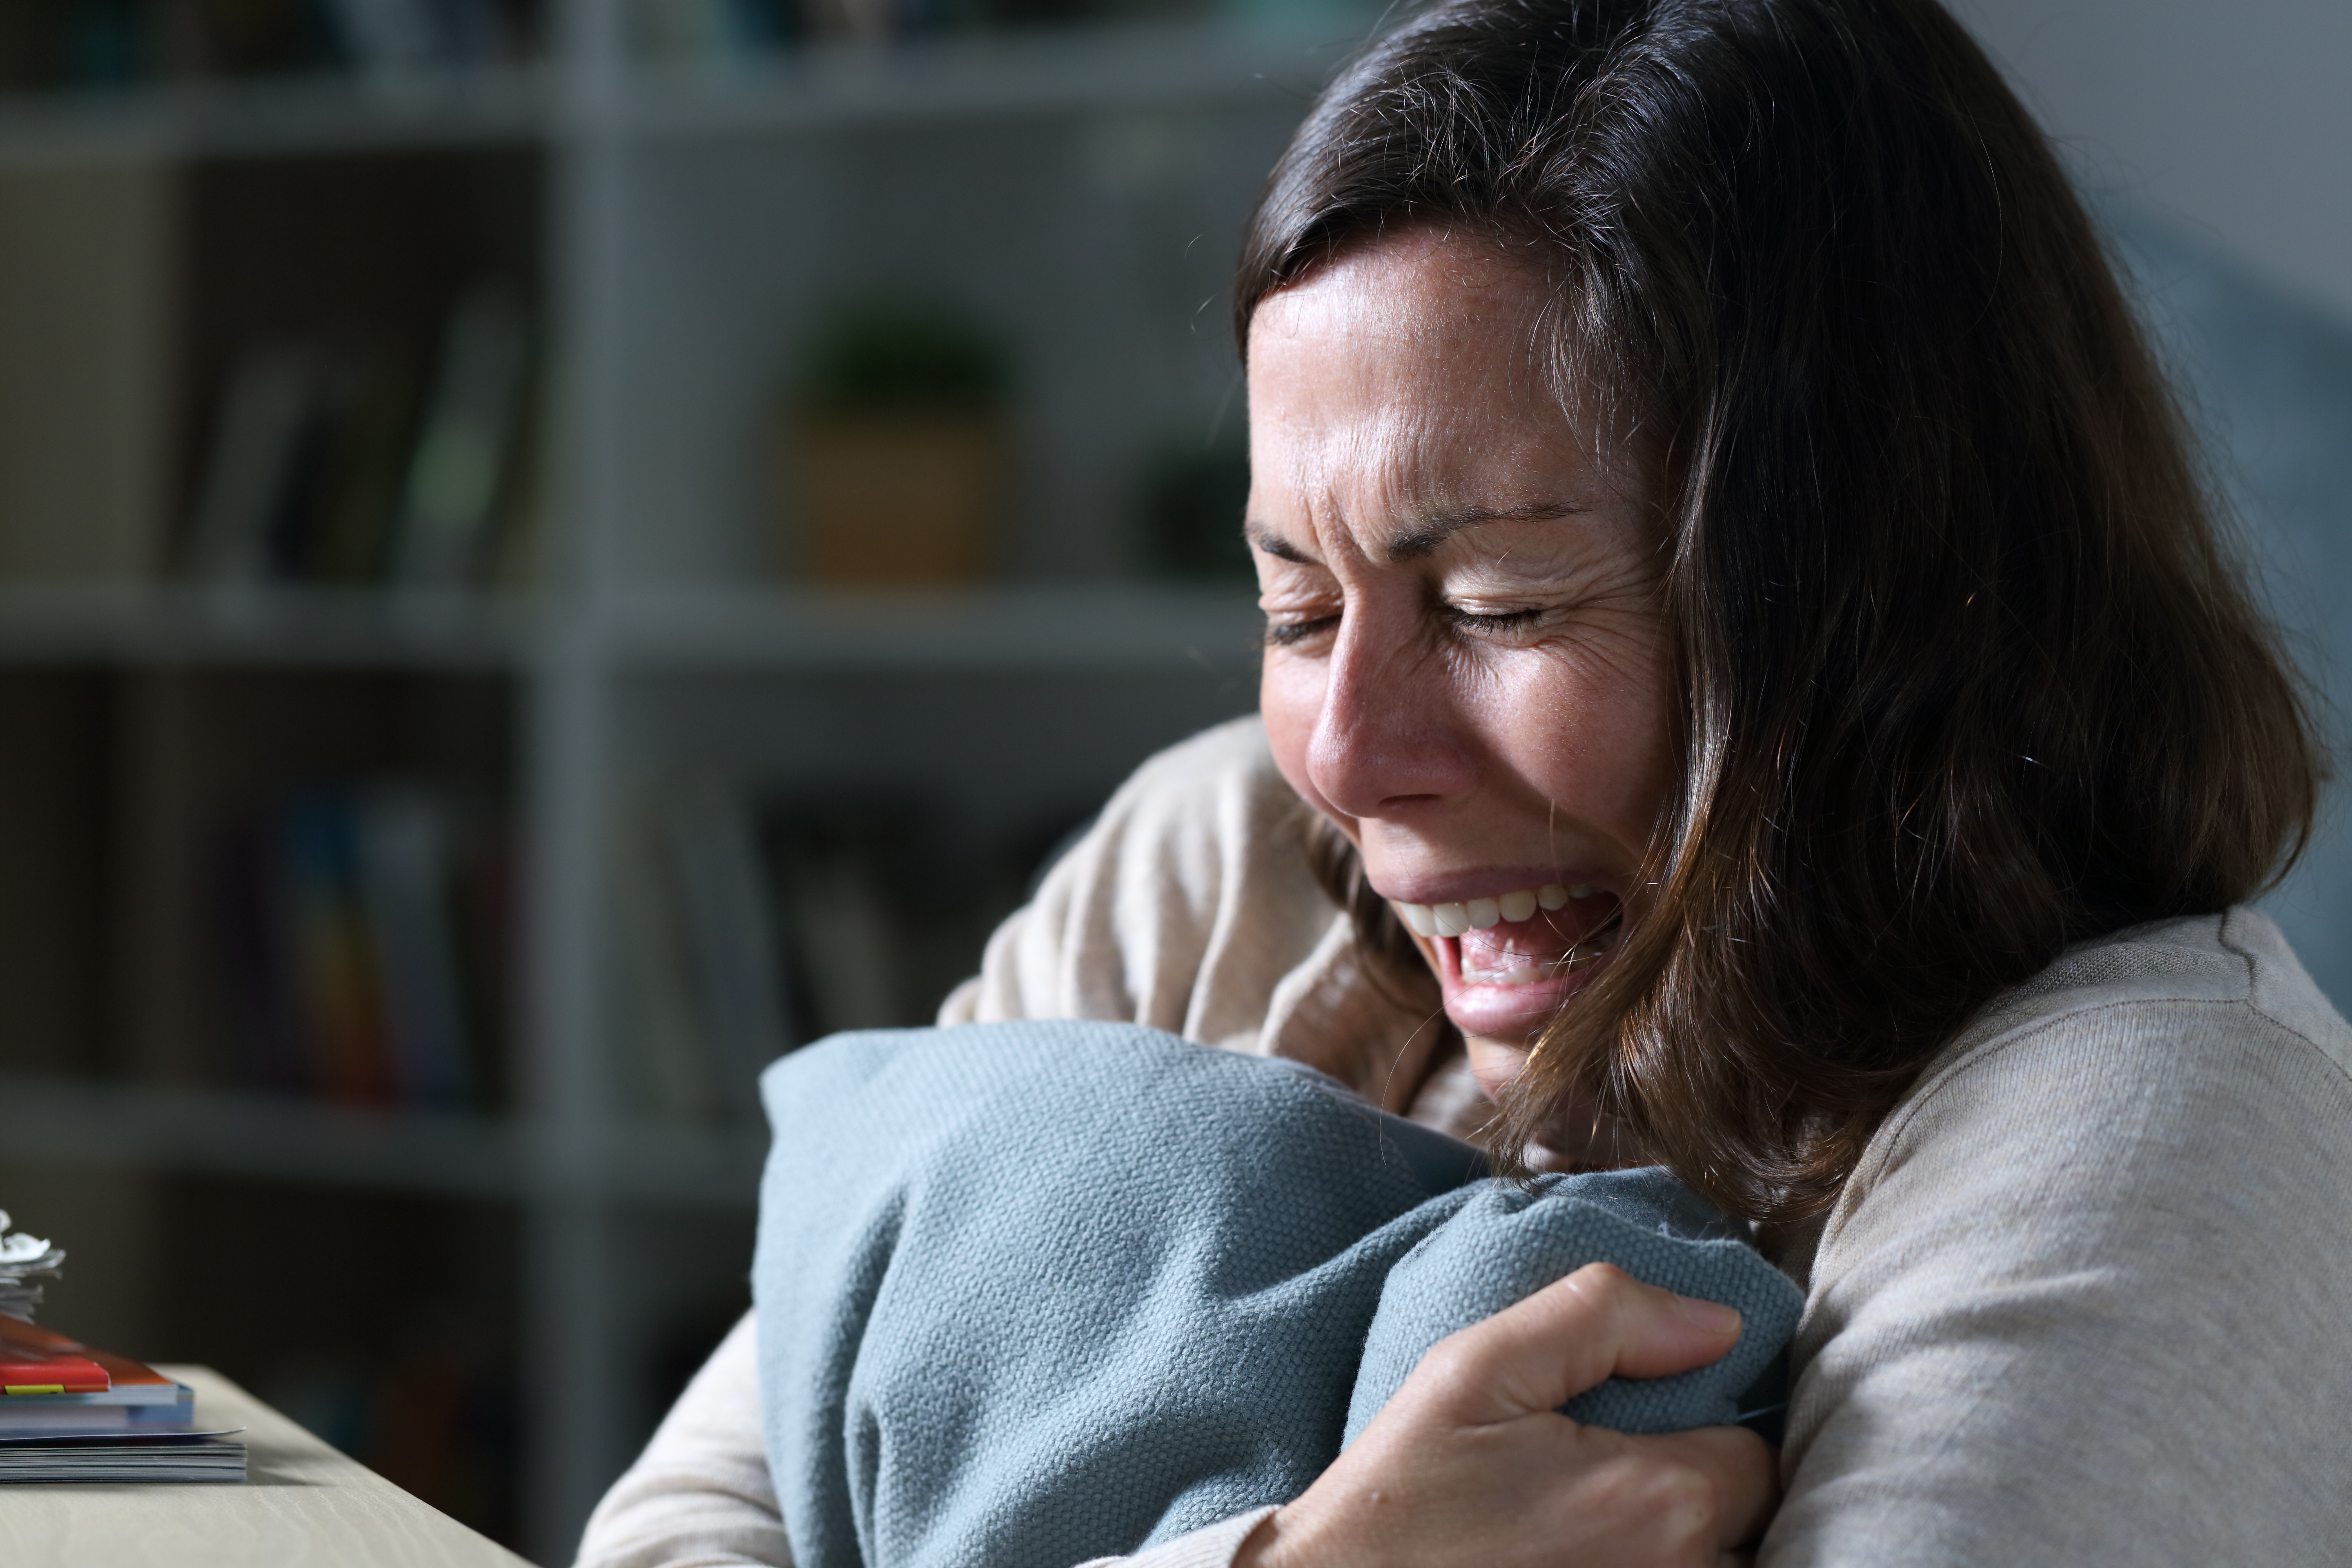 Sad woman crying | Source: Shutterstock.com